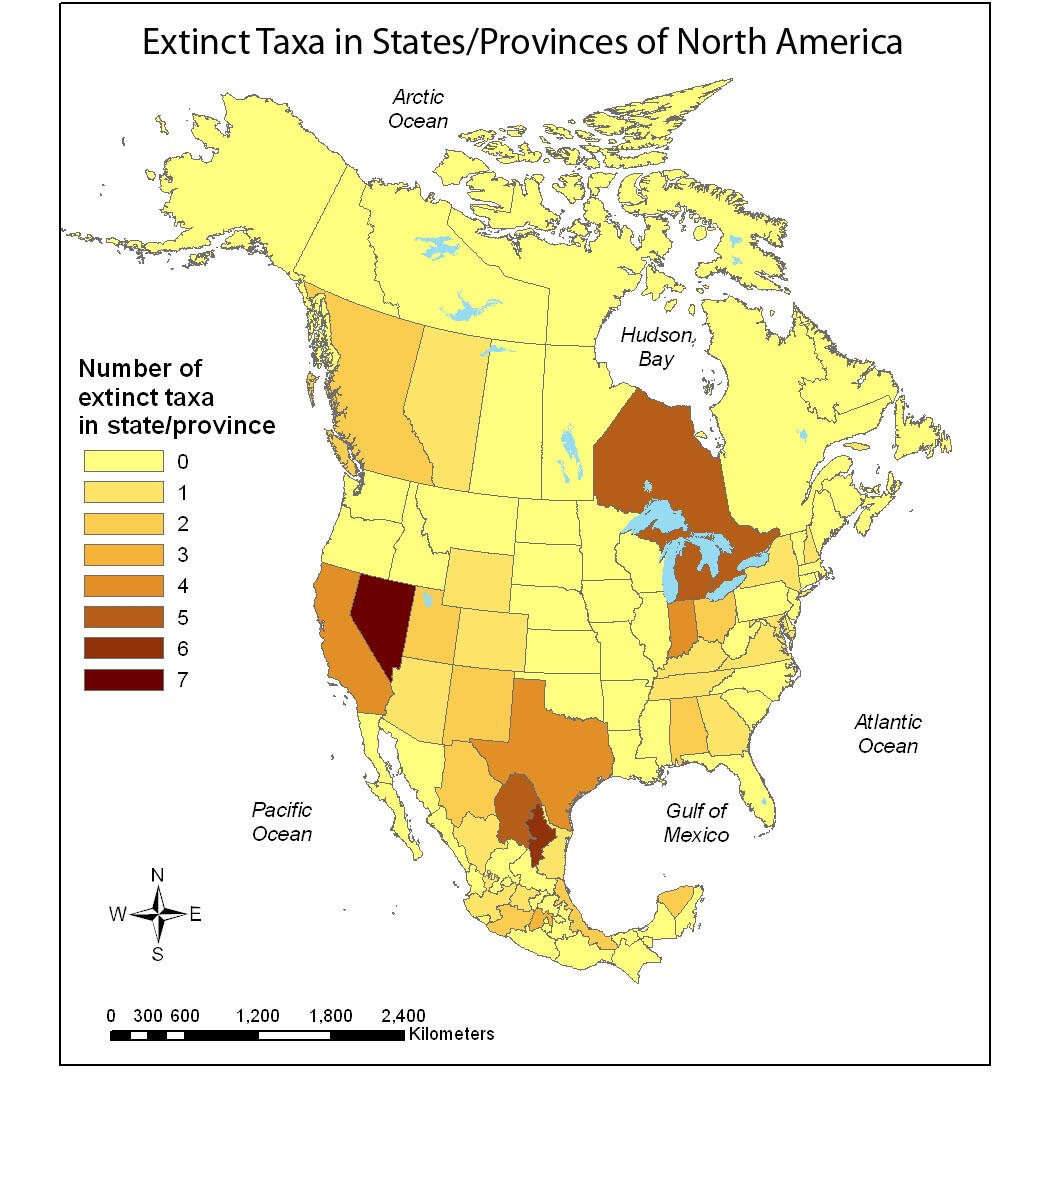 Extinct Taxa in States/Provinces of North America (2012)